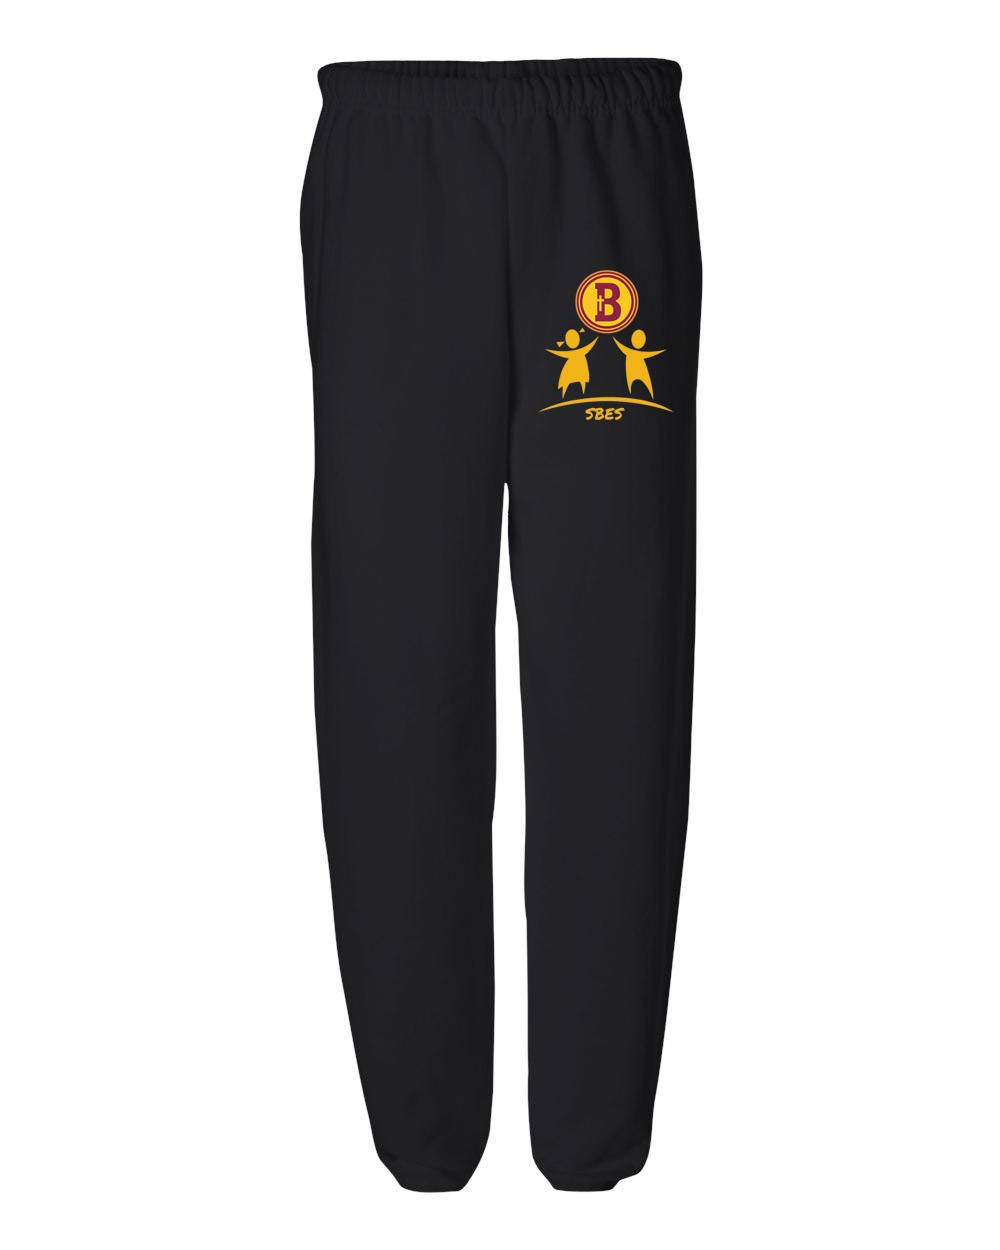 SBES Black Gym Sweatpants w/ School Logo